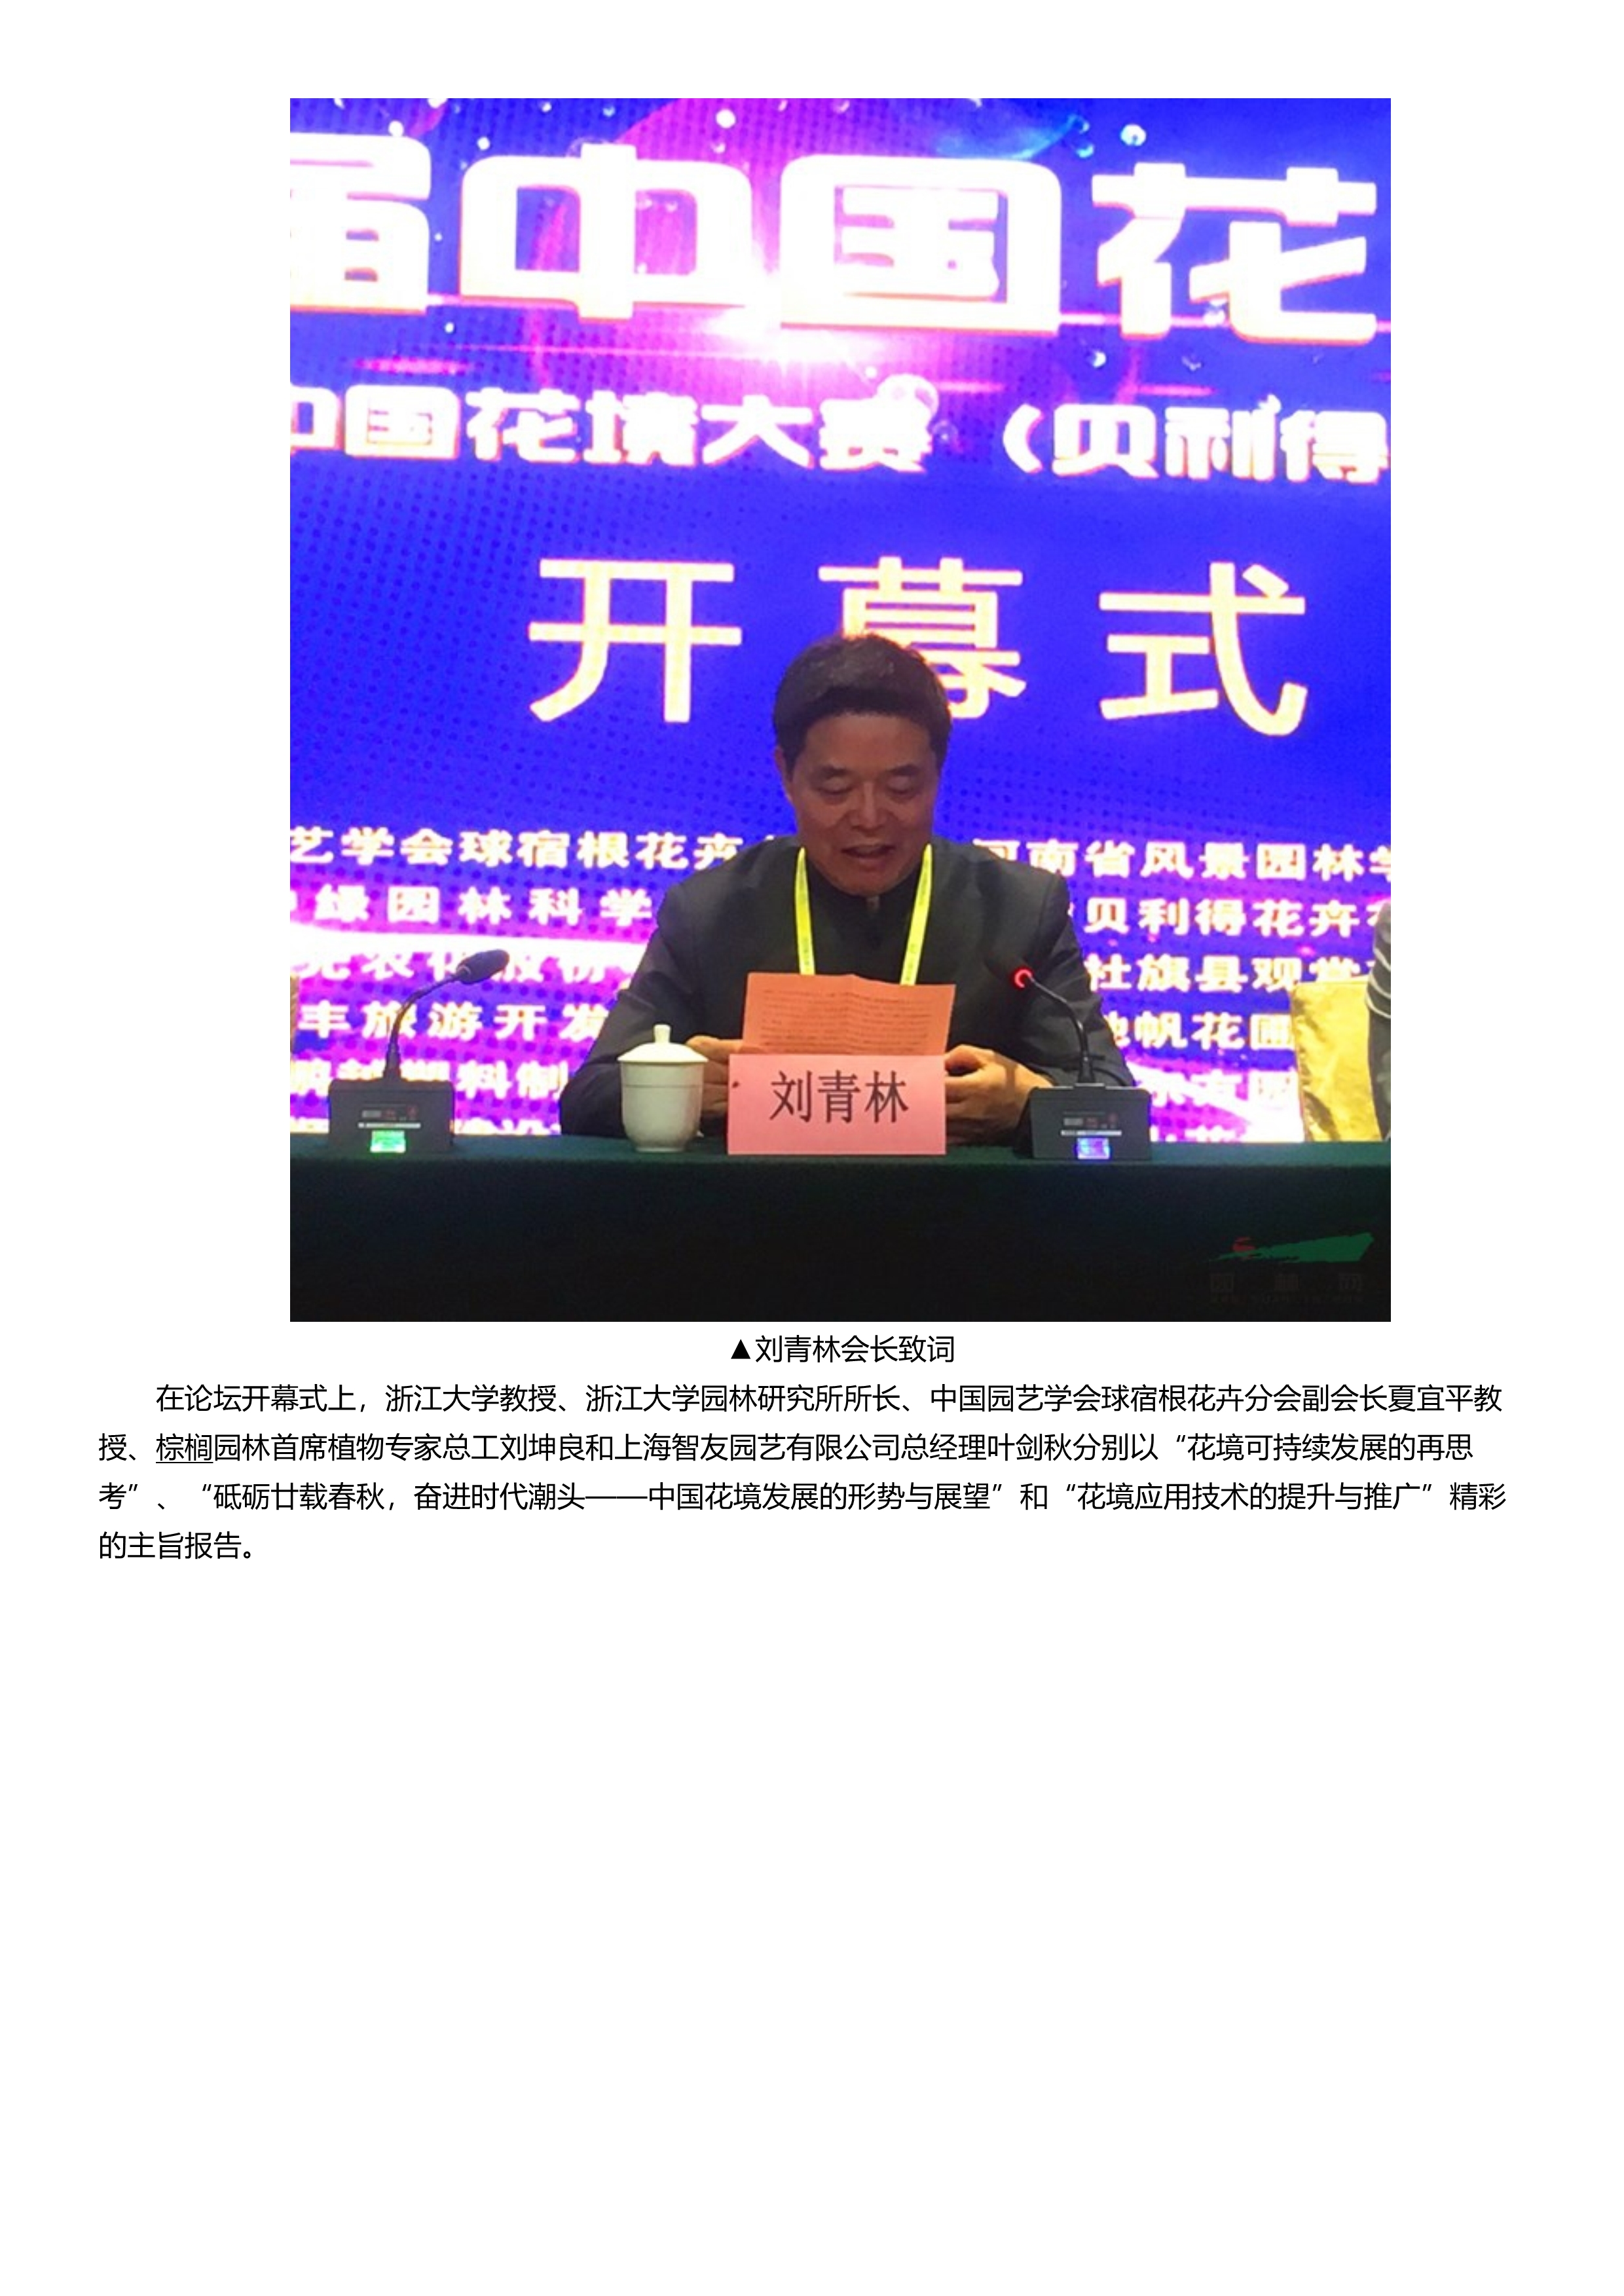 FB 05行业盛会 大咖云集 第五届中国花境论坛在郑州举办_2